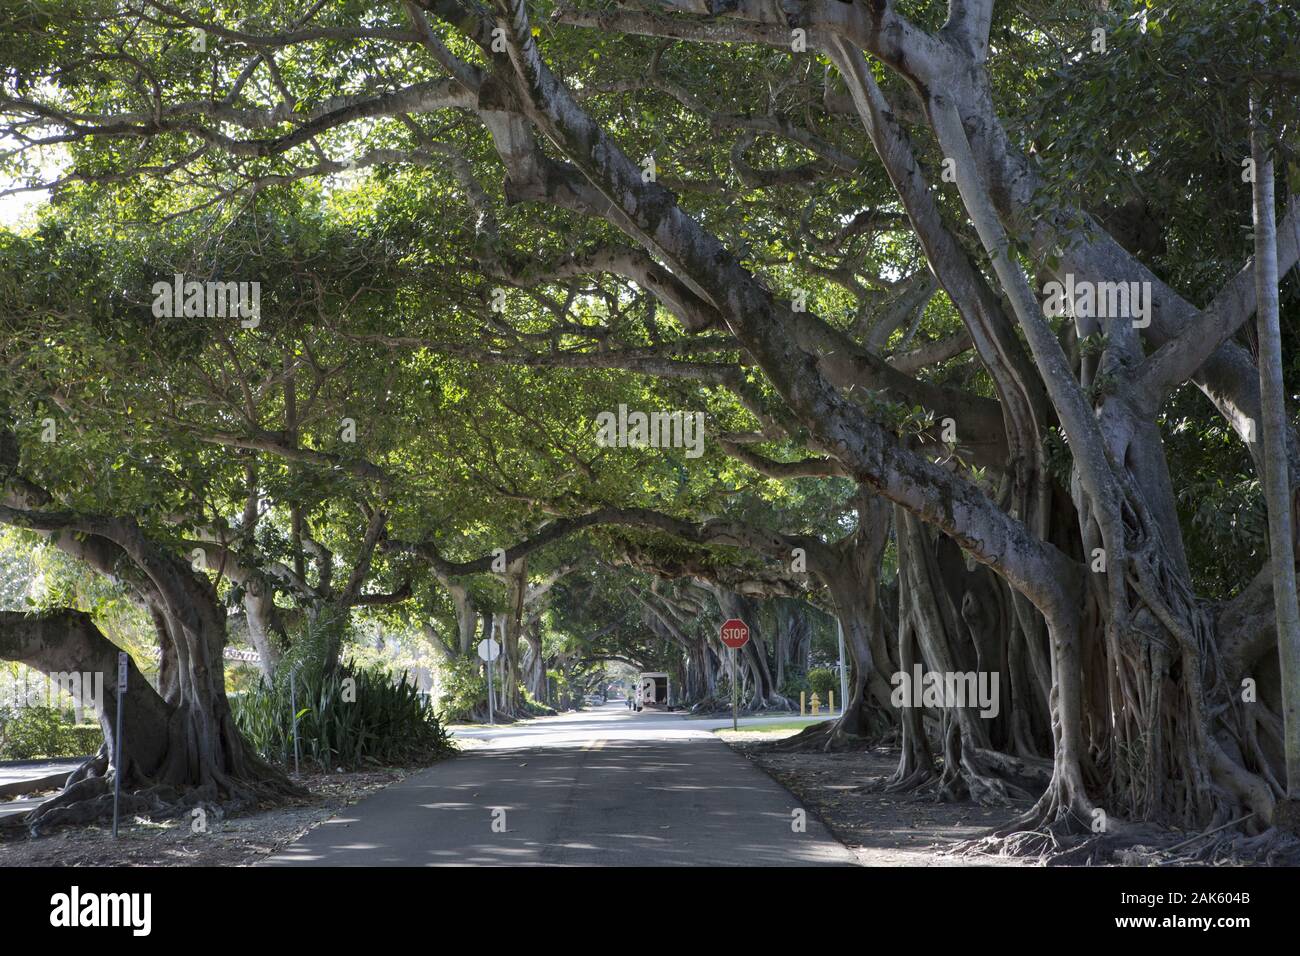 Miami: Allee im Stadtviertel Coral Gables, Florida | usage worldwide Stock Photo